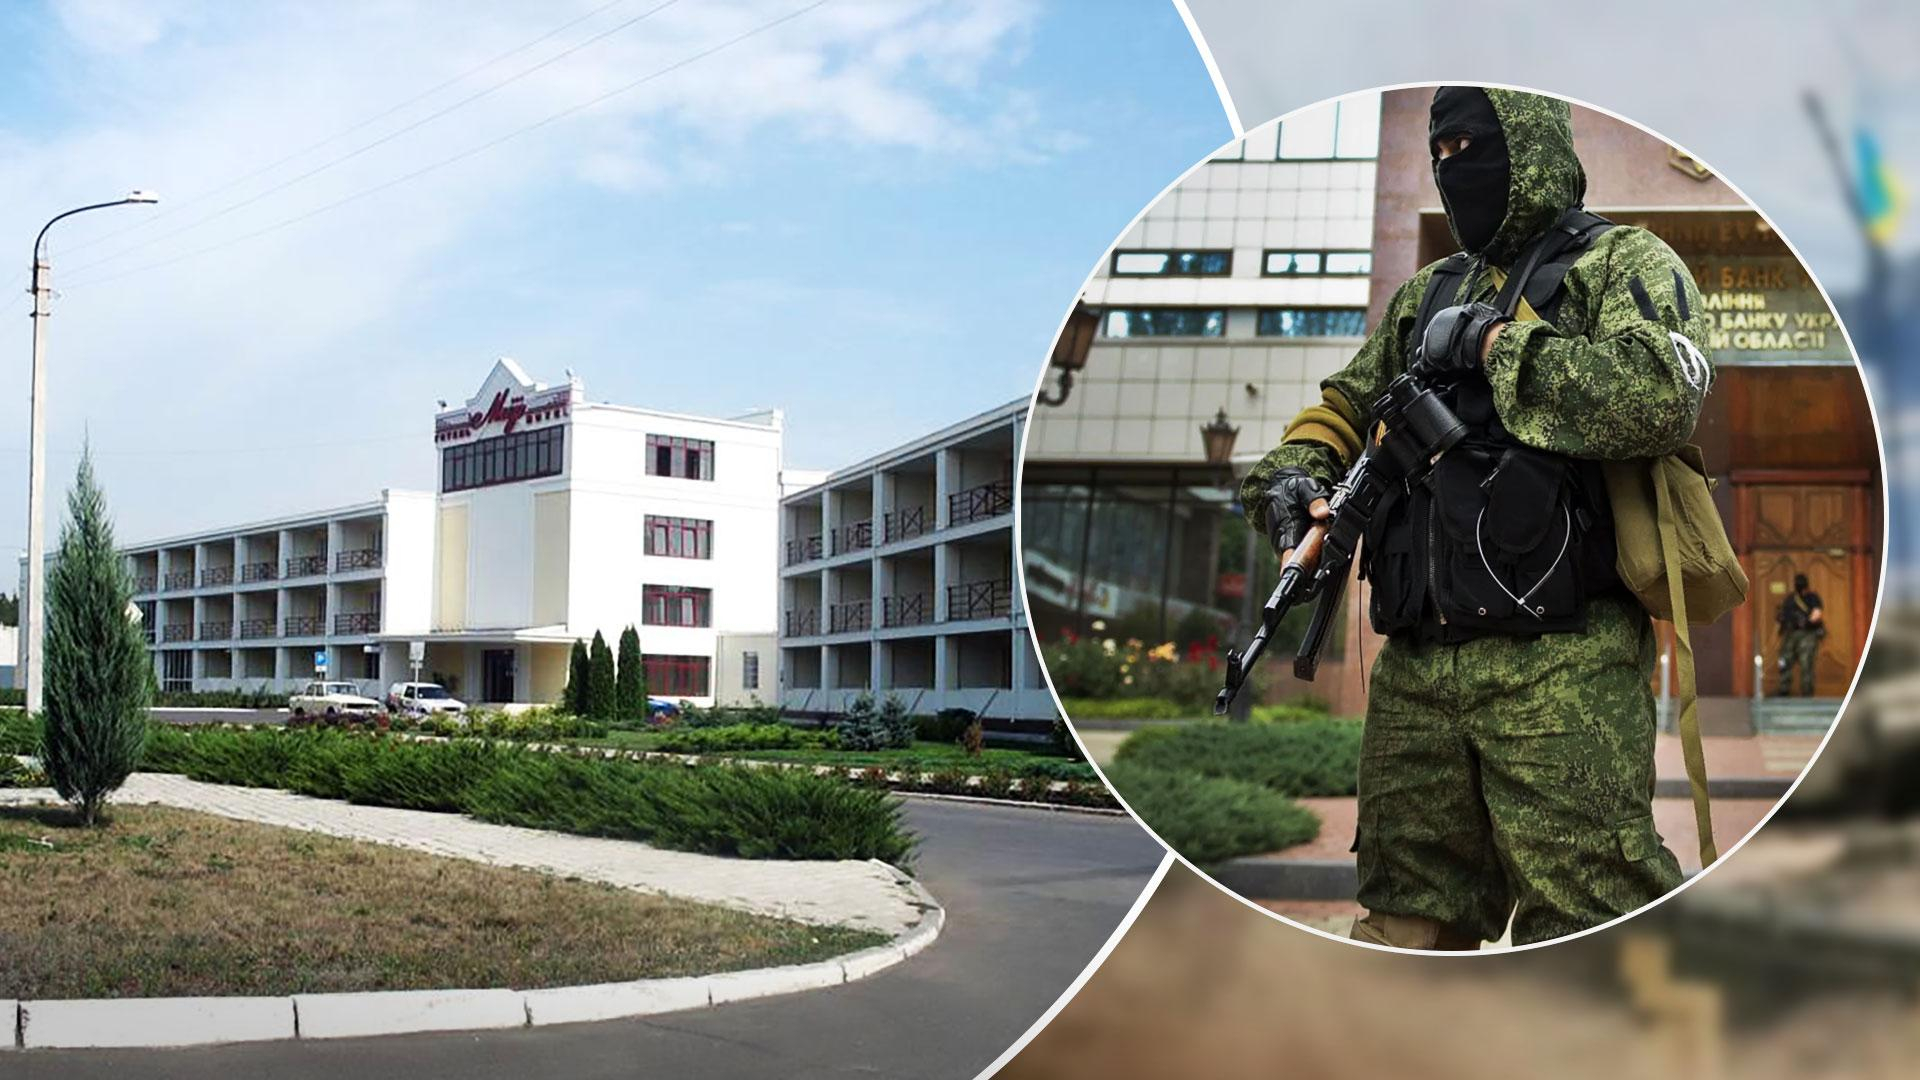 Российские войска без продвижения до сих пор сидят в отеле "Мир" на окраине Северодонецка